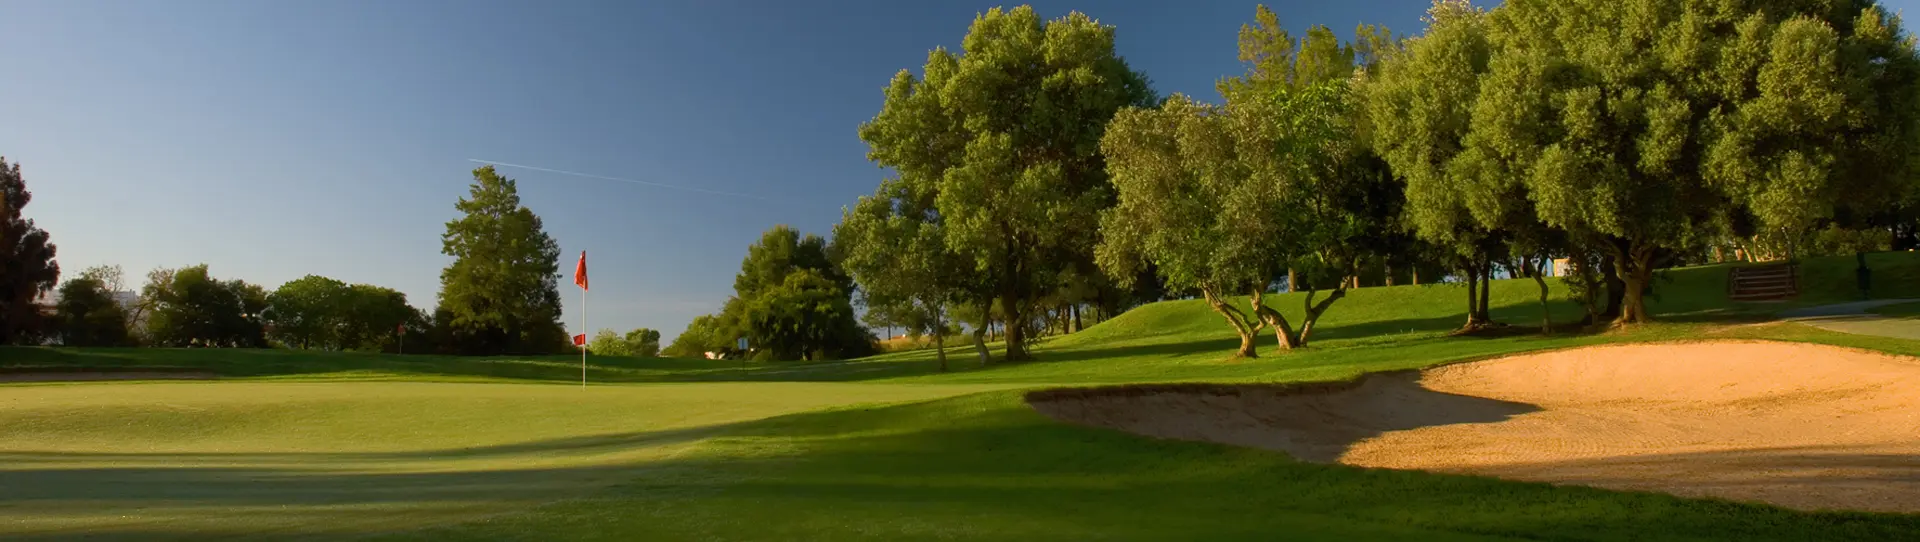 Portugal golf courses - Alto Golf Course - Photo 2